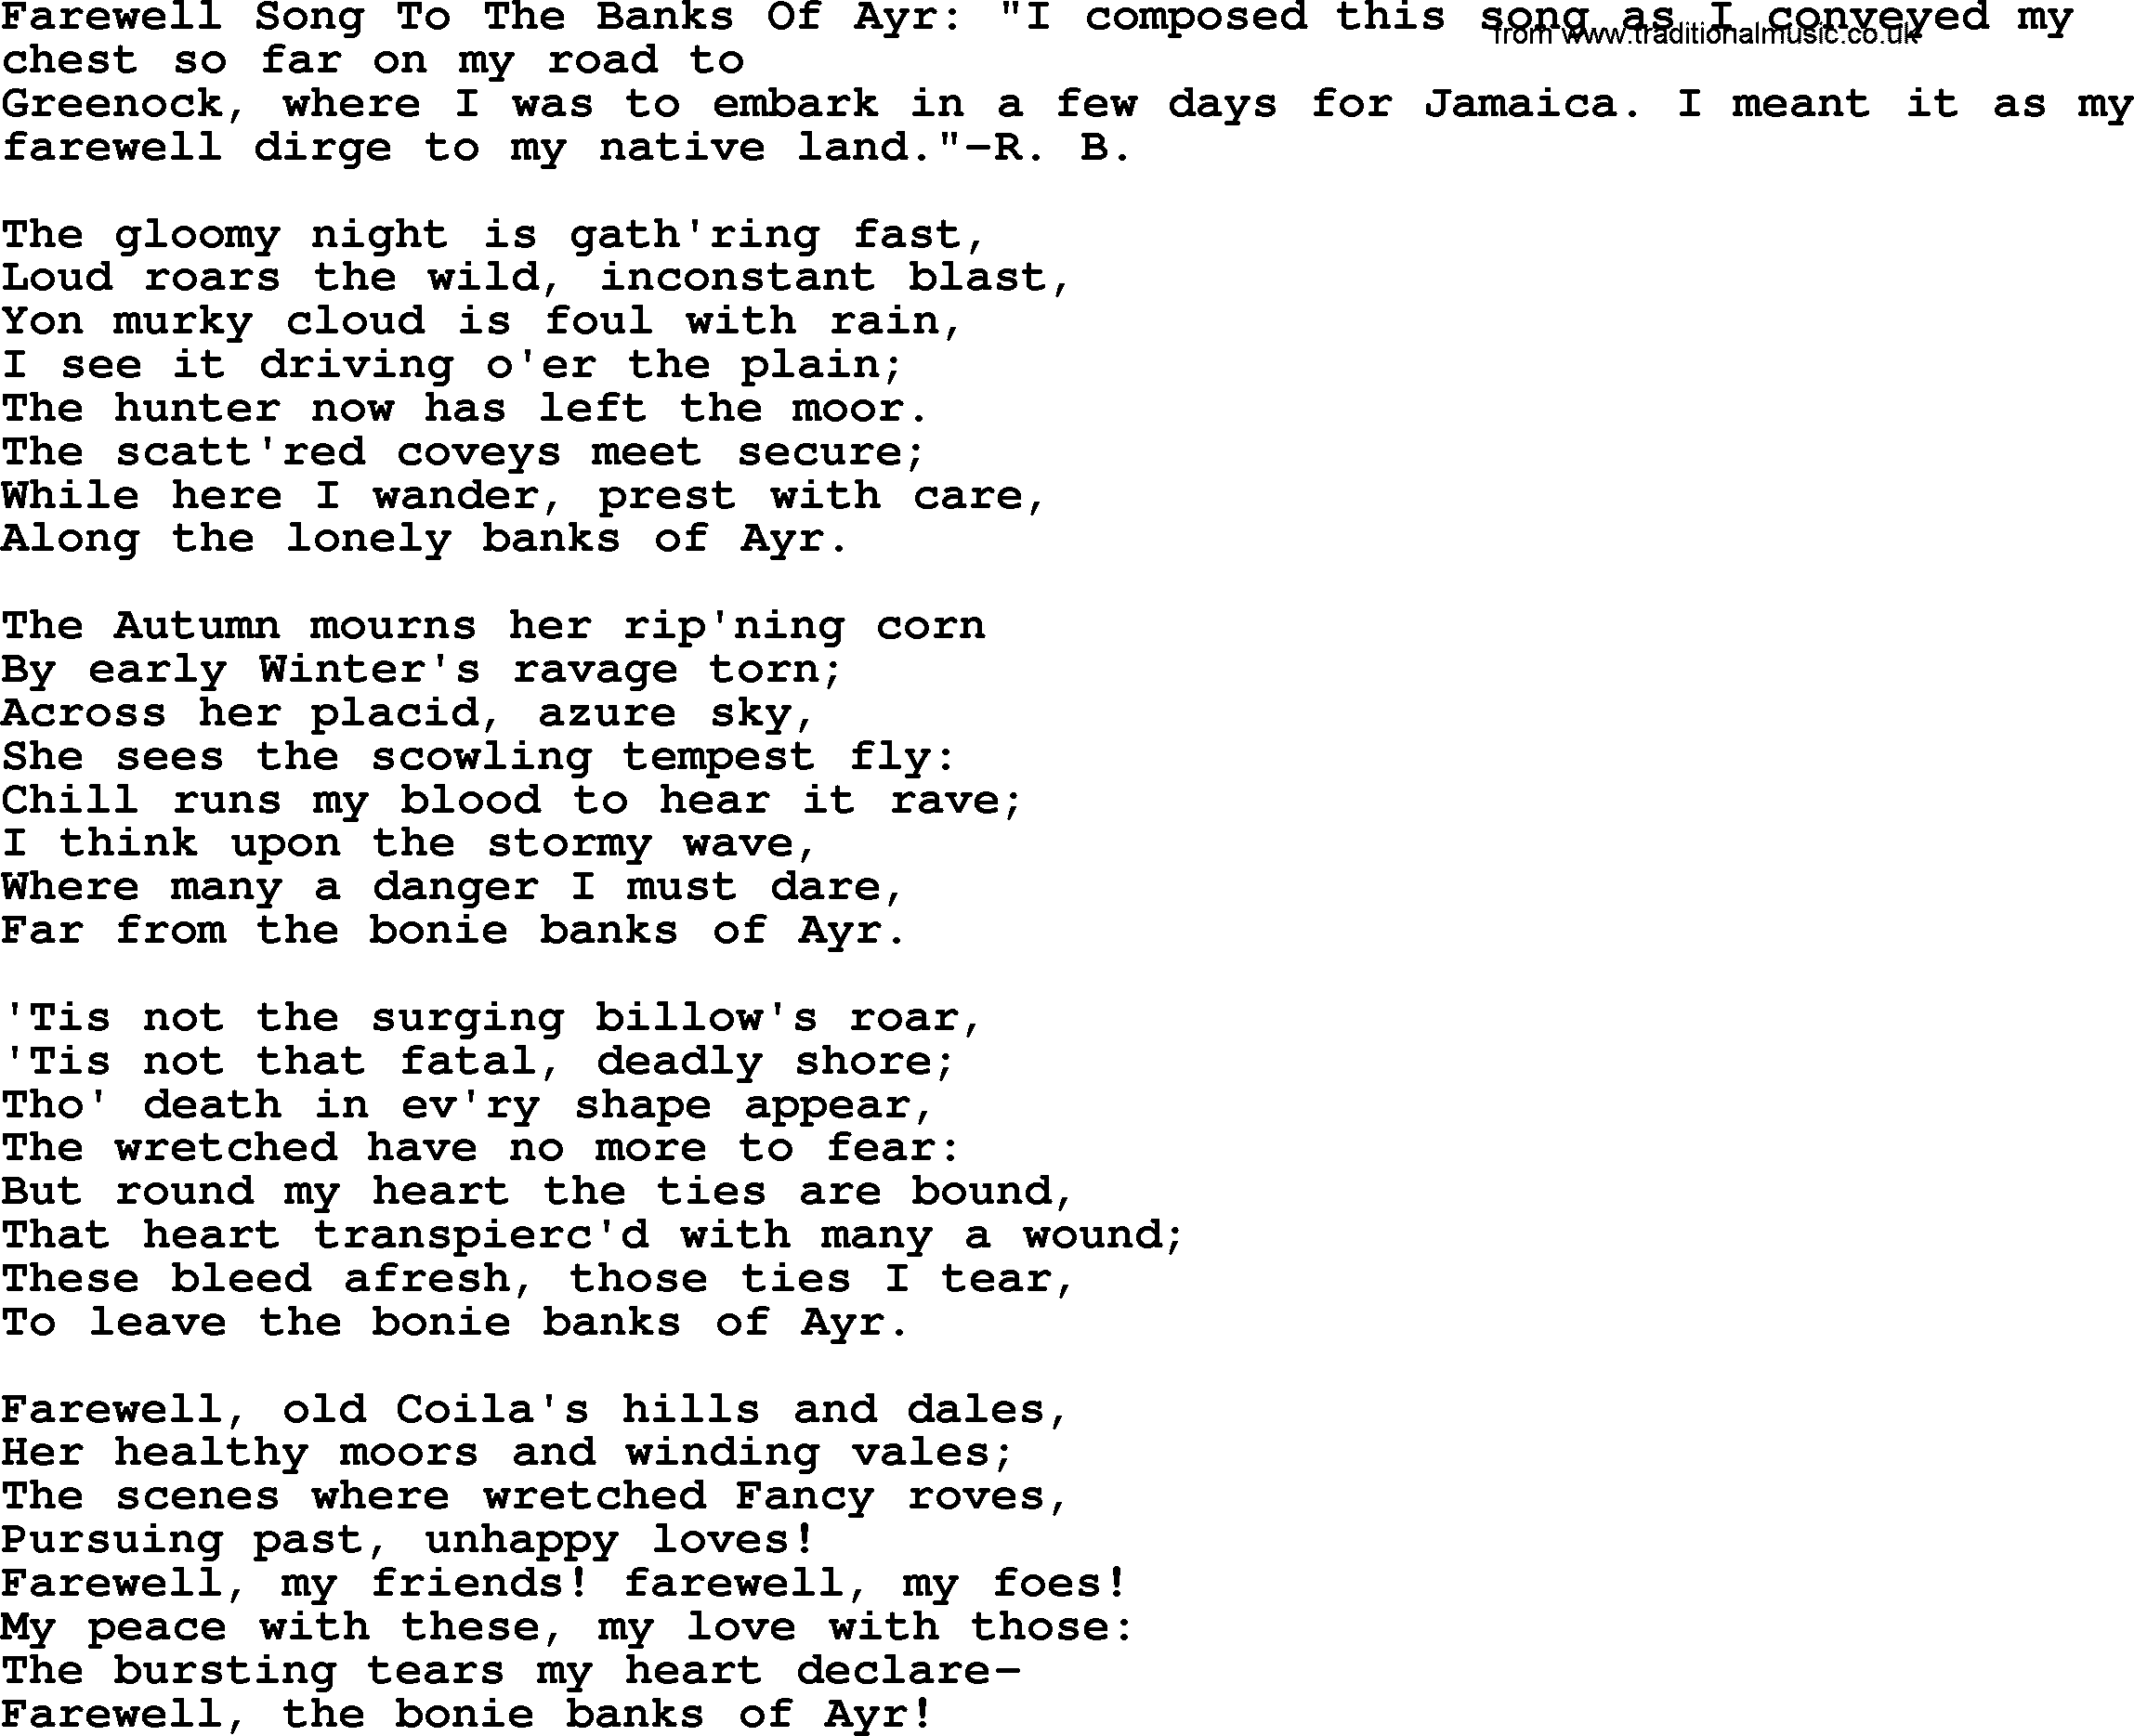 Robert Burns Songs & Lyrics: Farewell Song To The Banks Of Ay